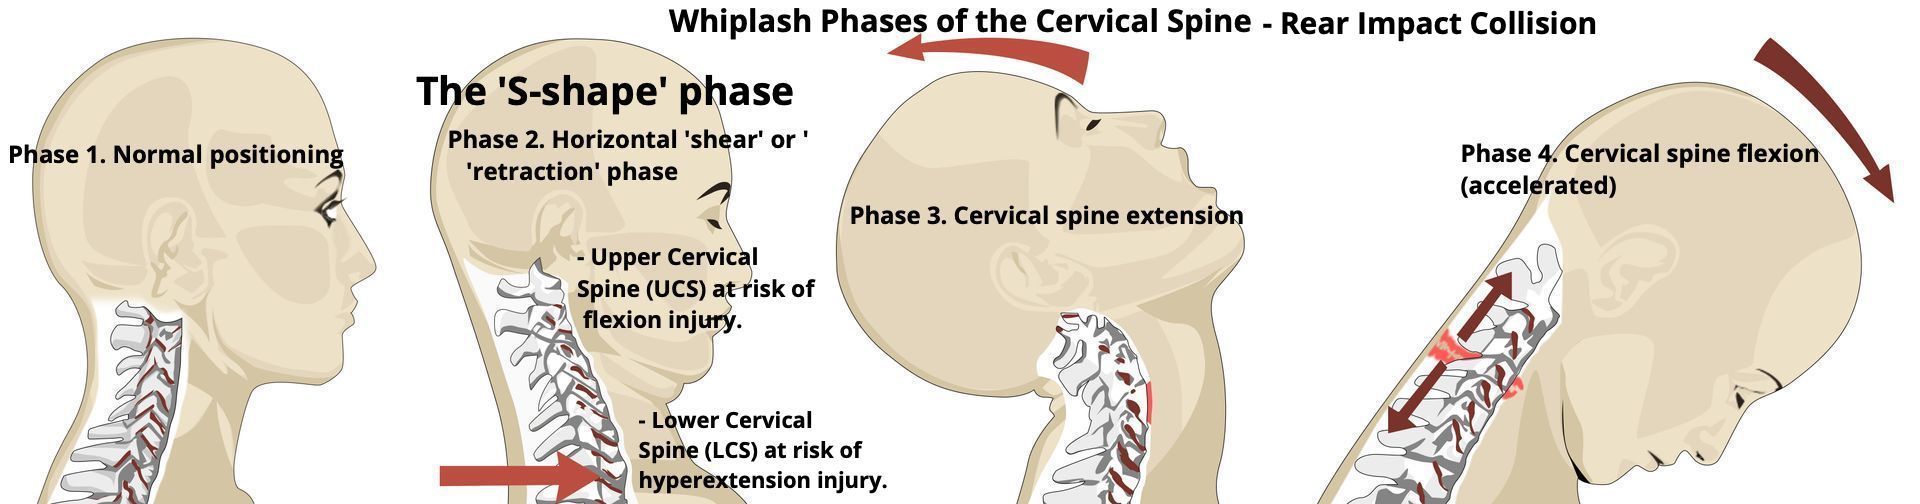 stages of whiplash injury 